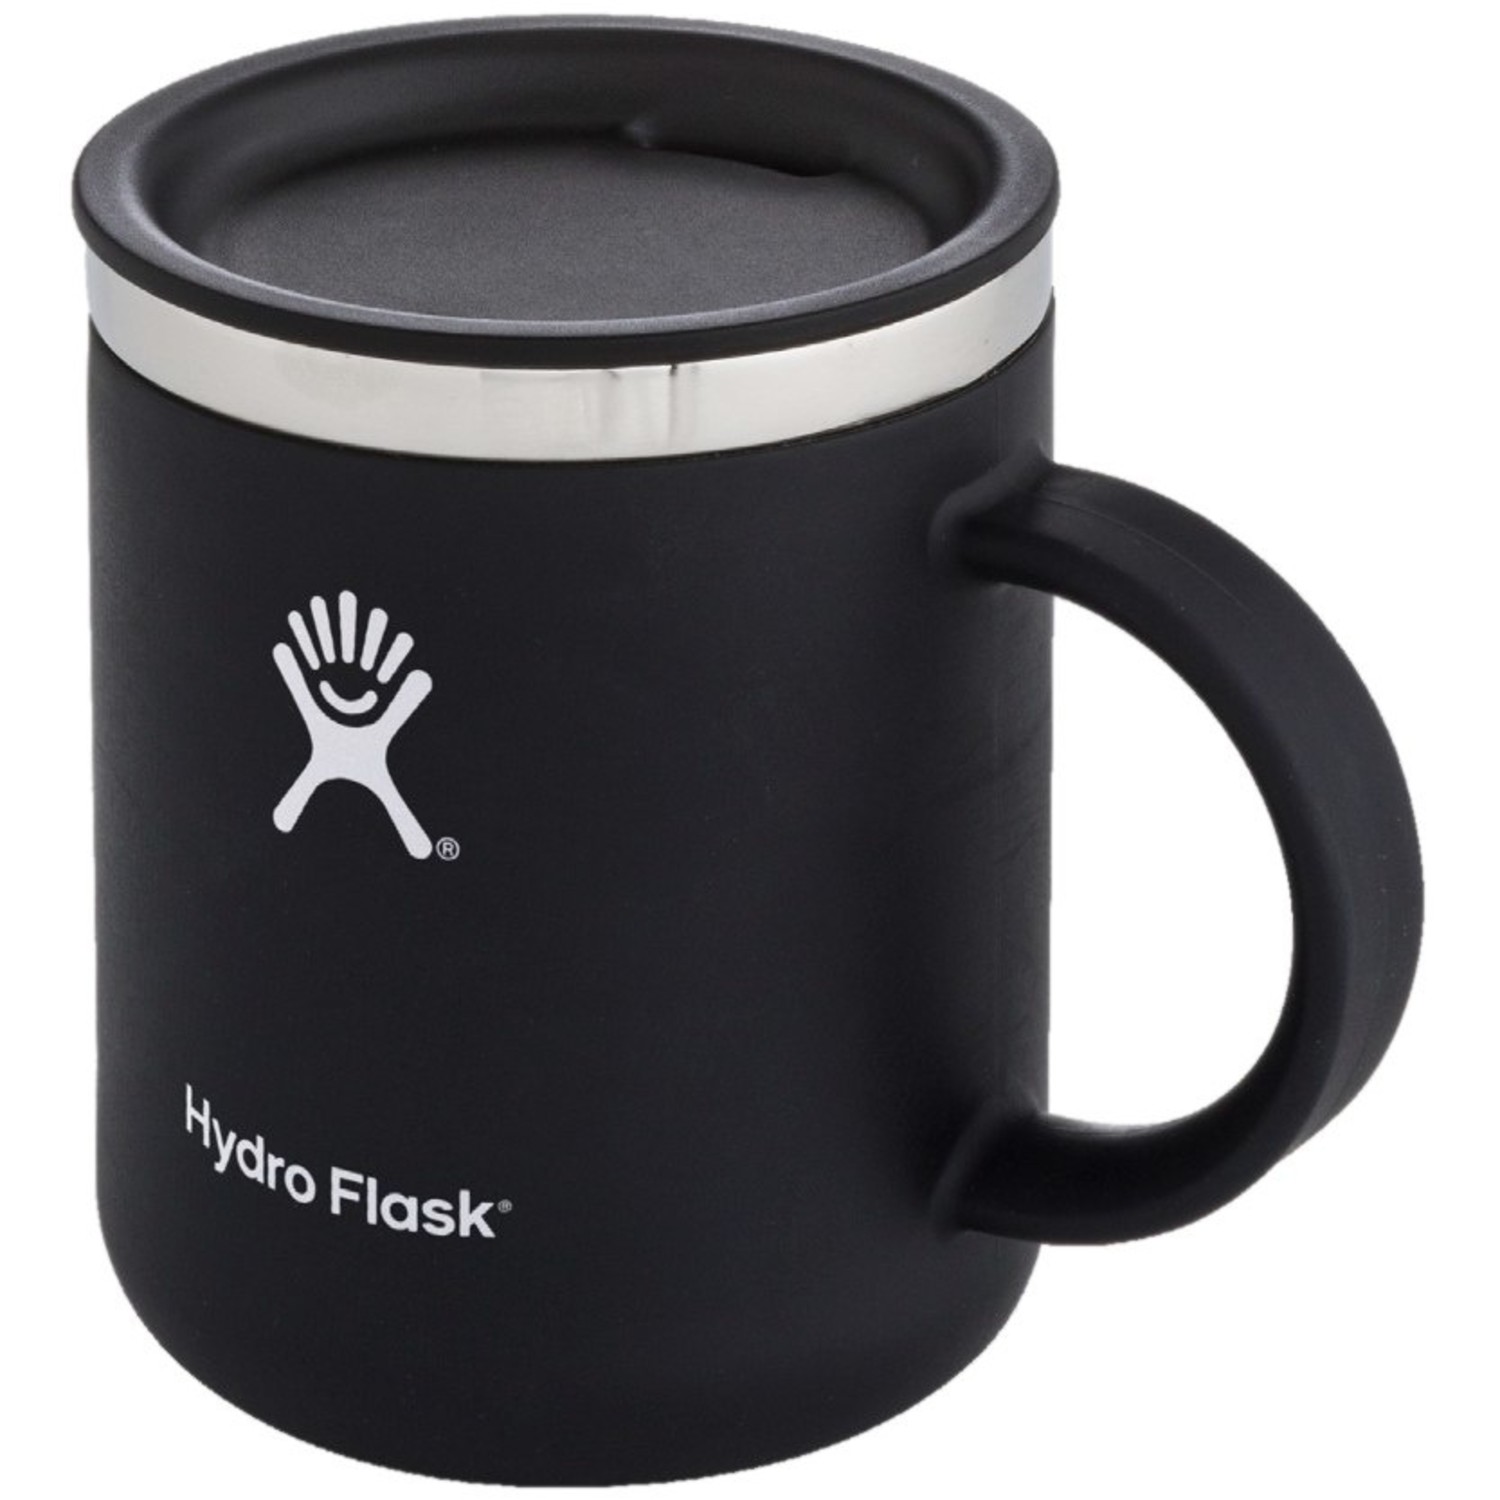 https://cdn.shoplightspeed.com/shops/618749/files/47567408/1500x4000x3/hydro-flask-hydro-flask-12-oz-coffee-mug-black.jpg